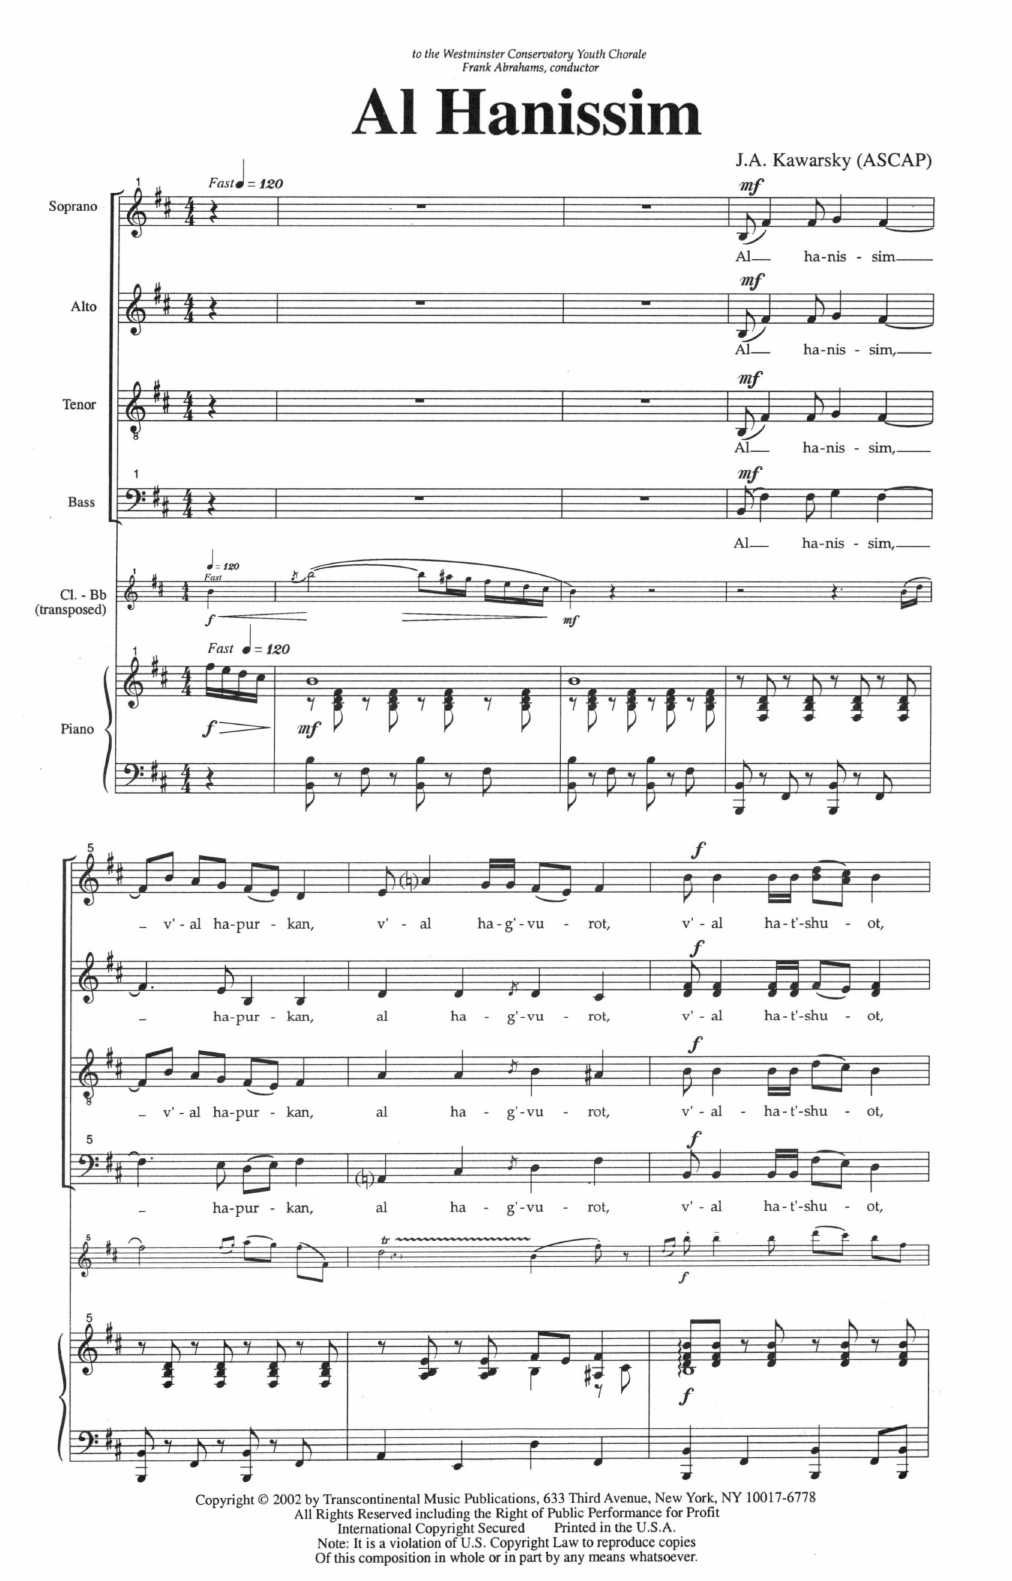 J.A. Kawarsky Al Hanissim (Chanukah Song) sheet music notes and chords arranged for SATB Choir